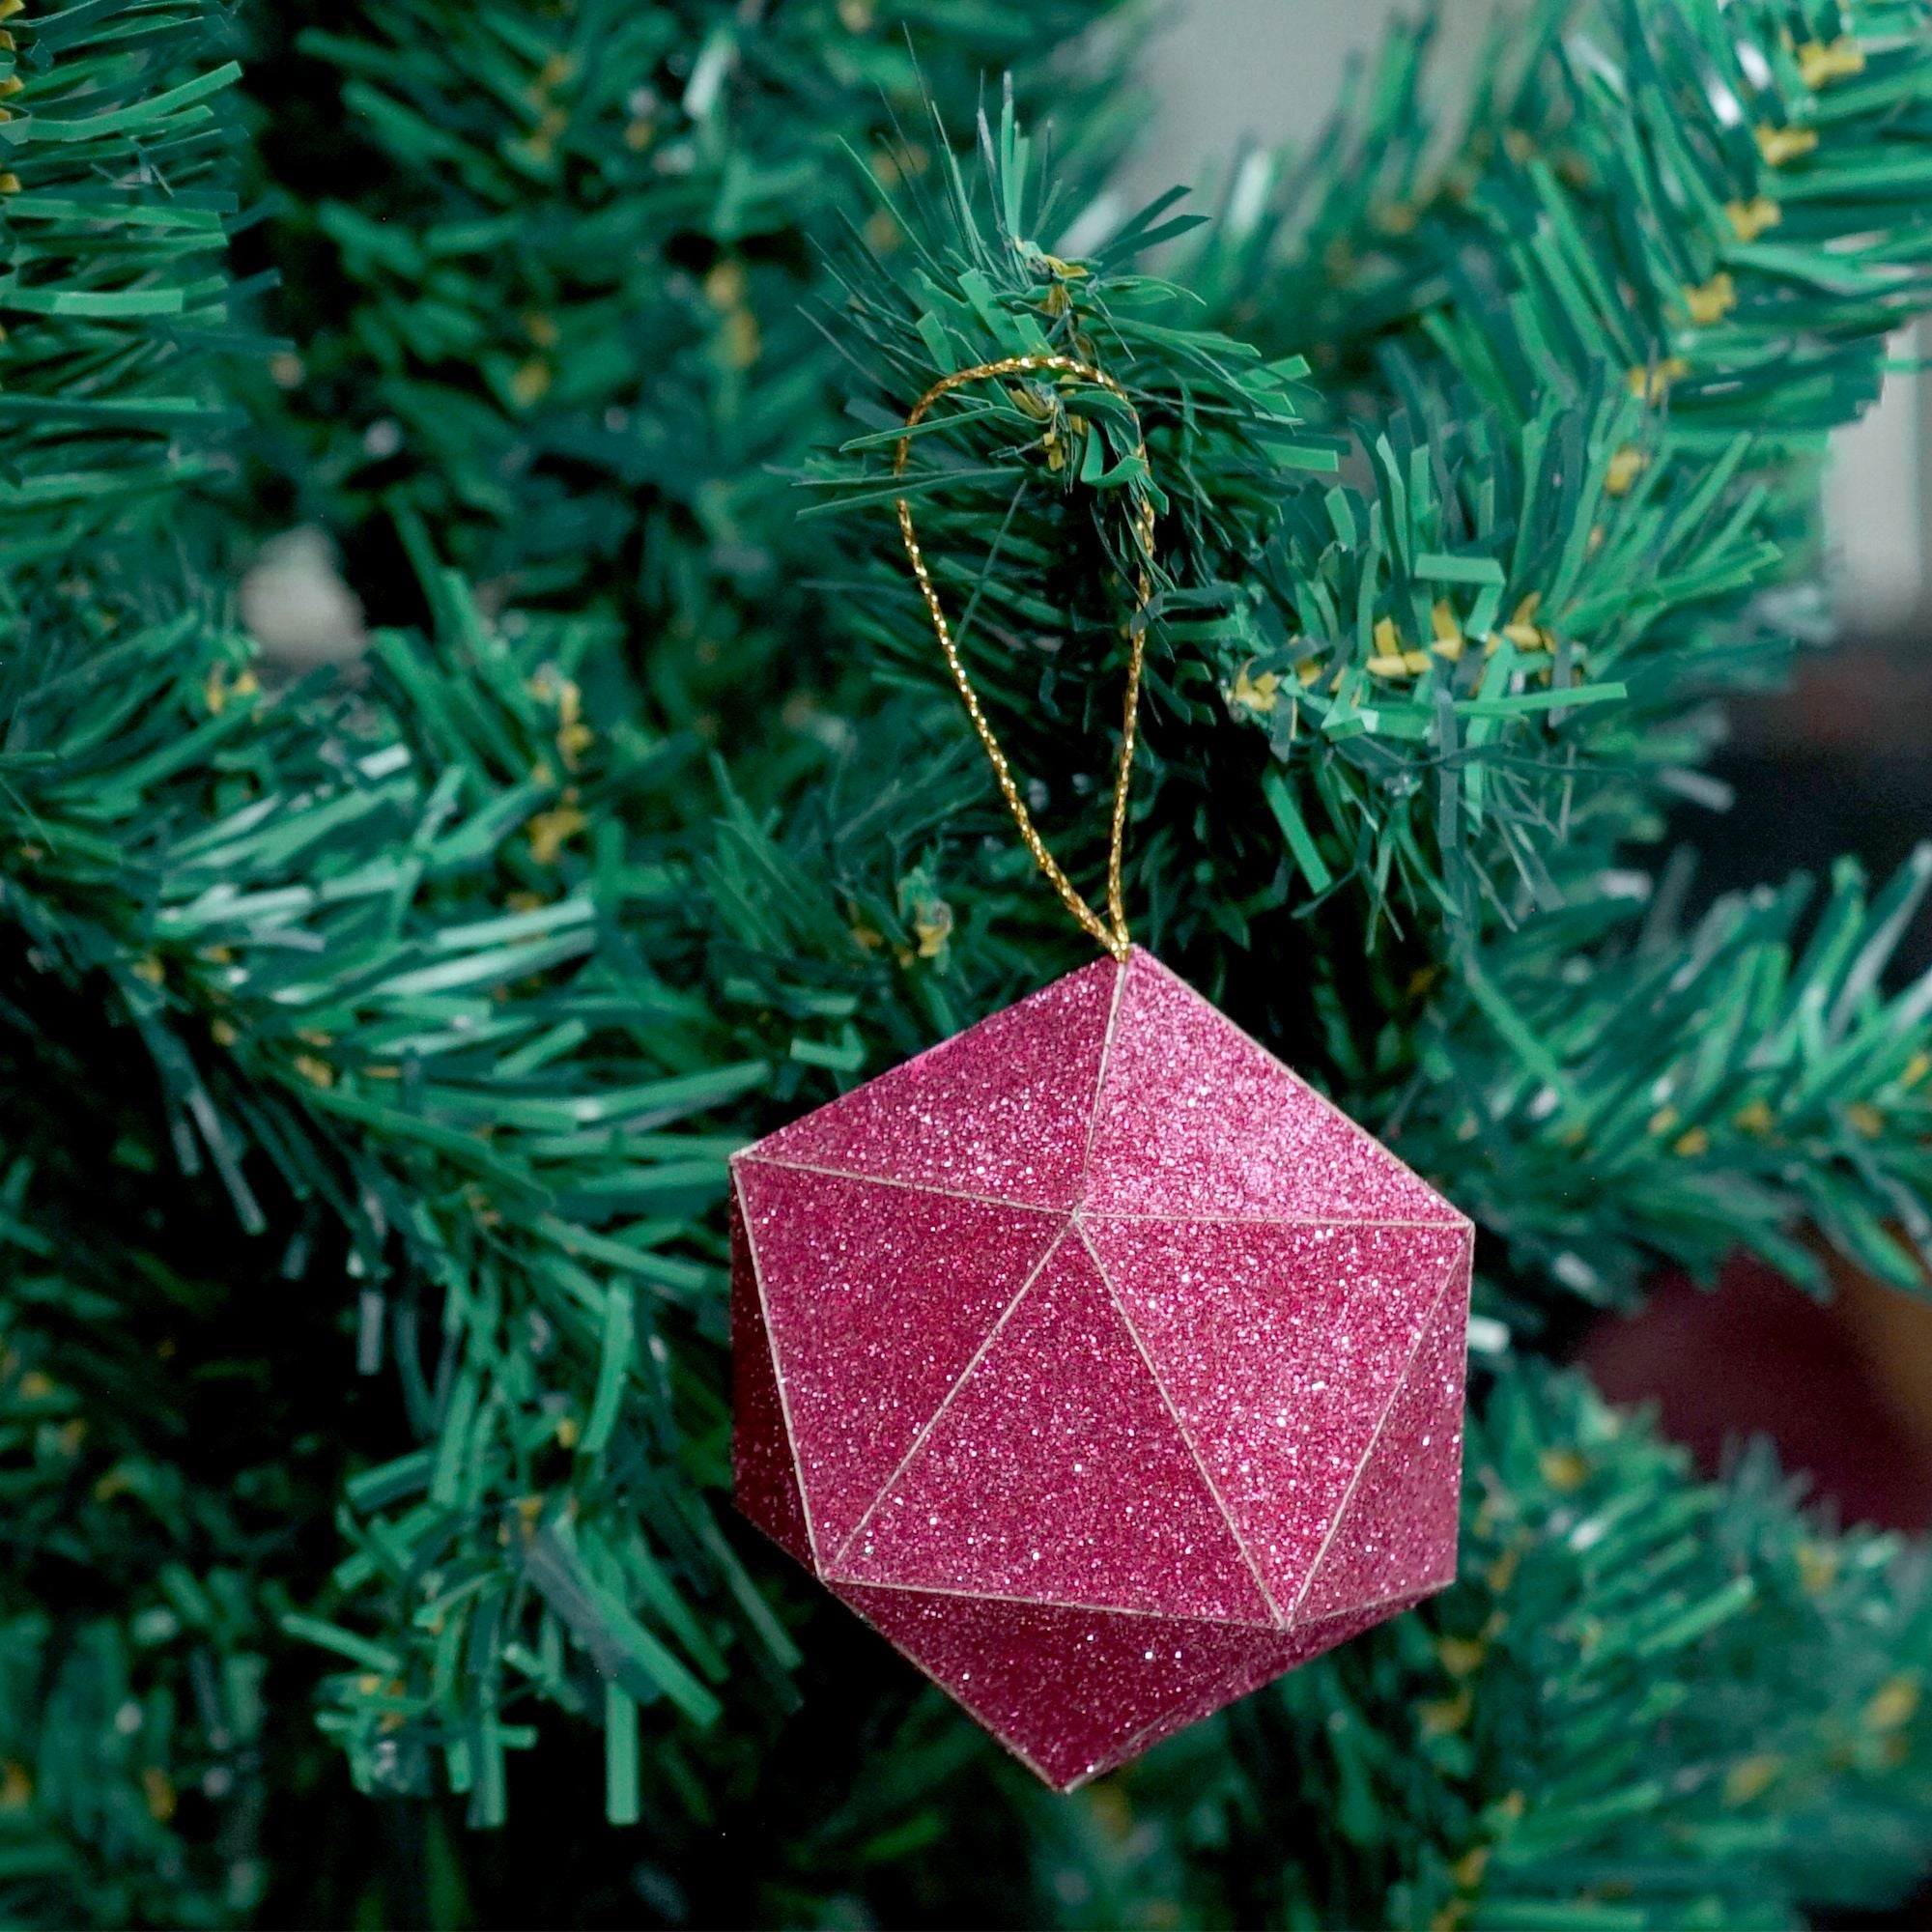 Handmade Christmas Trapezoid Hanging  Glitter Ornaments, 45mm, Pink, 8pc